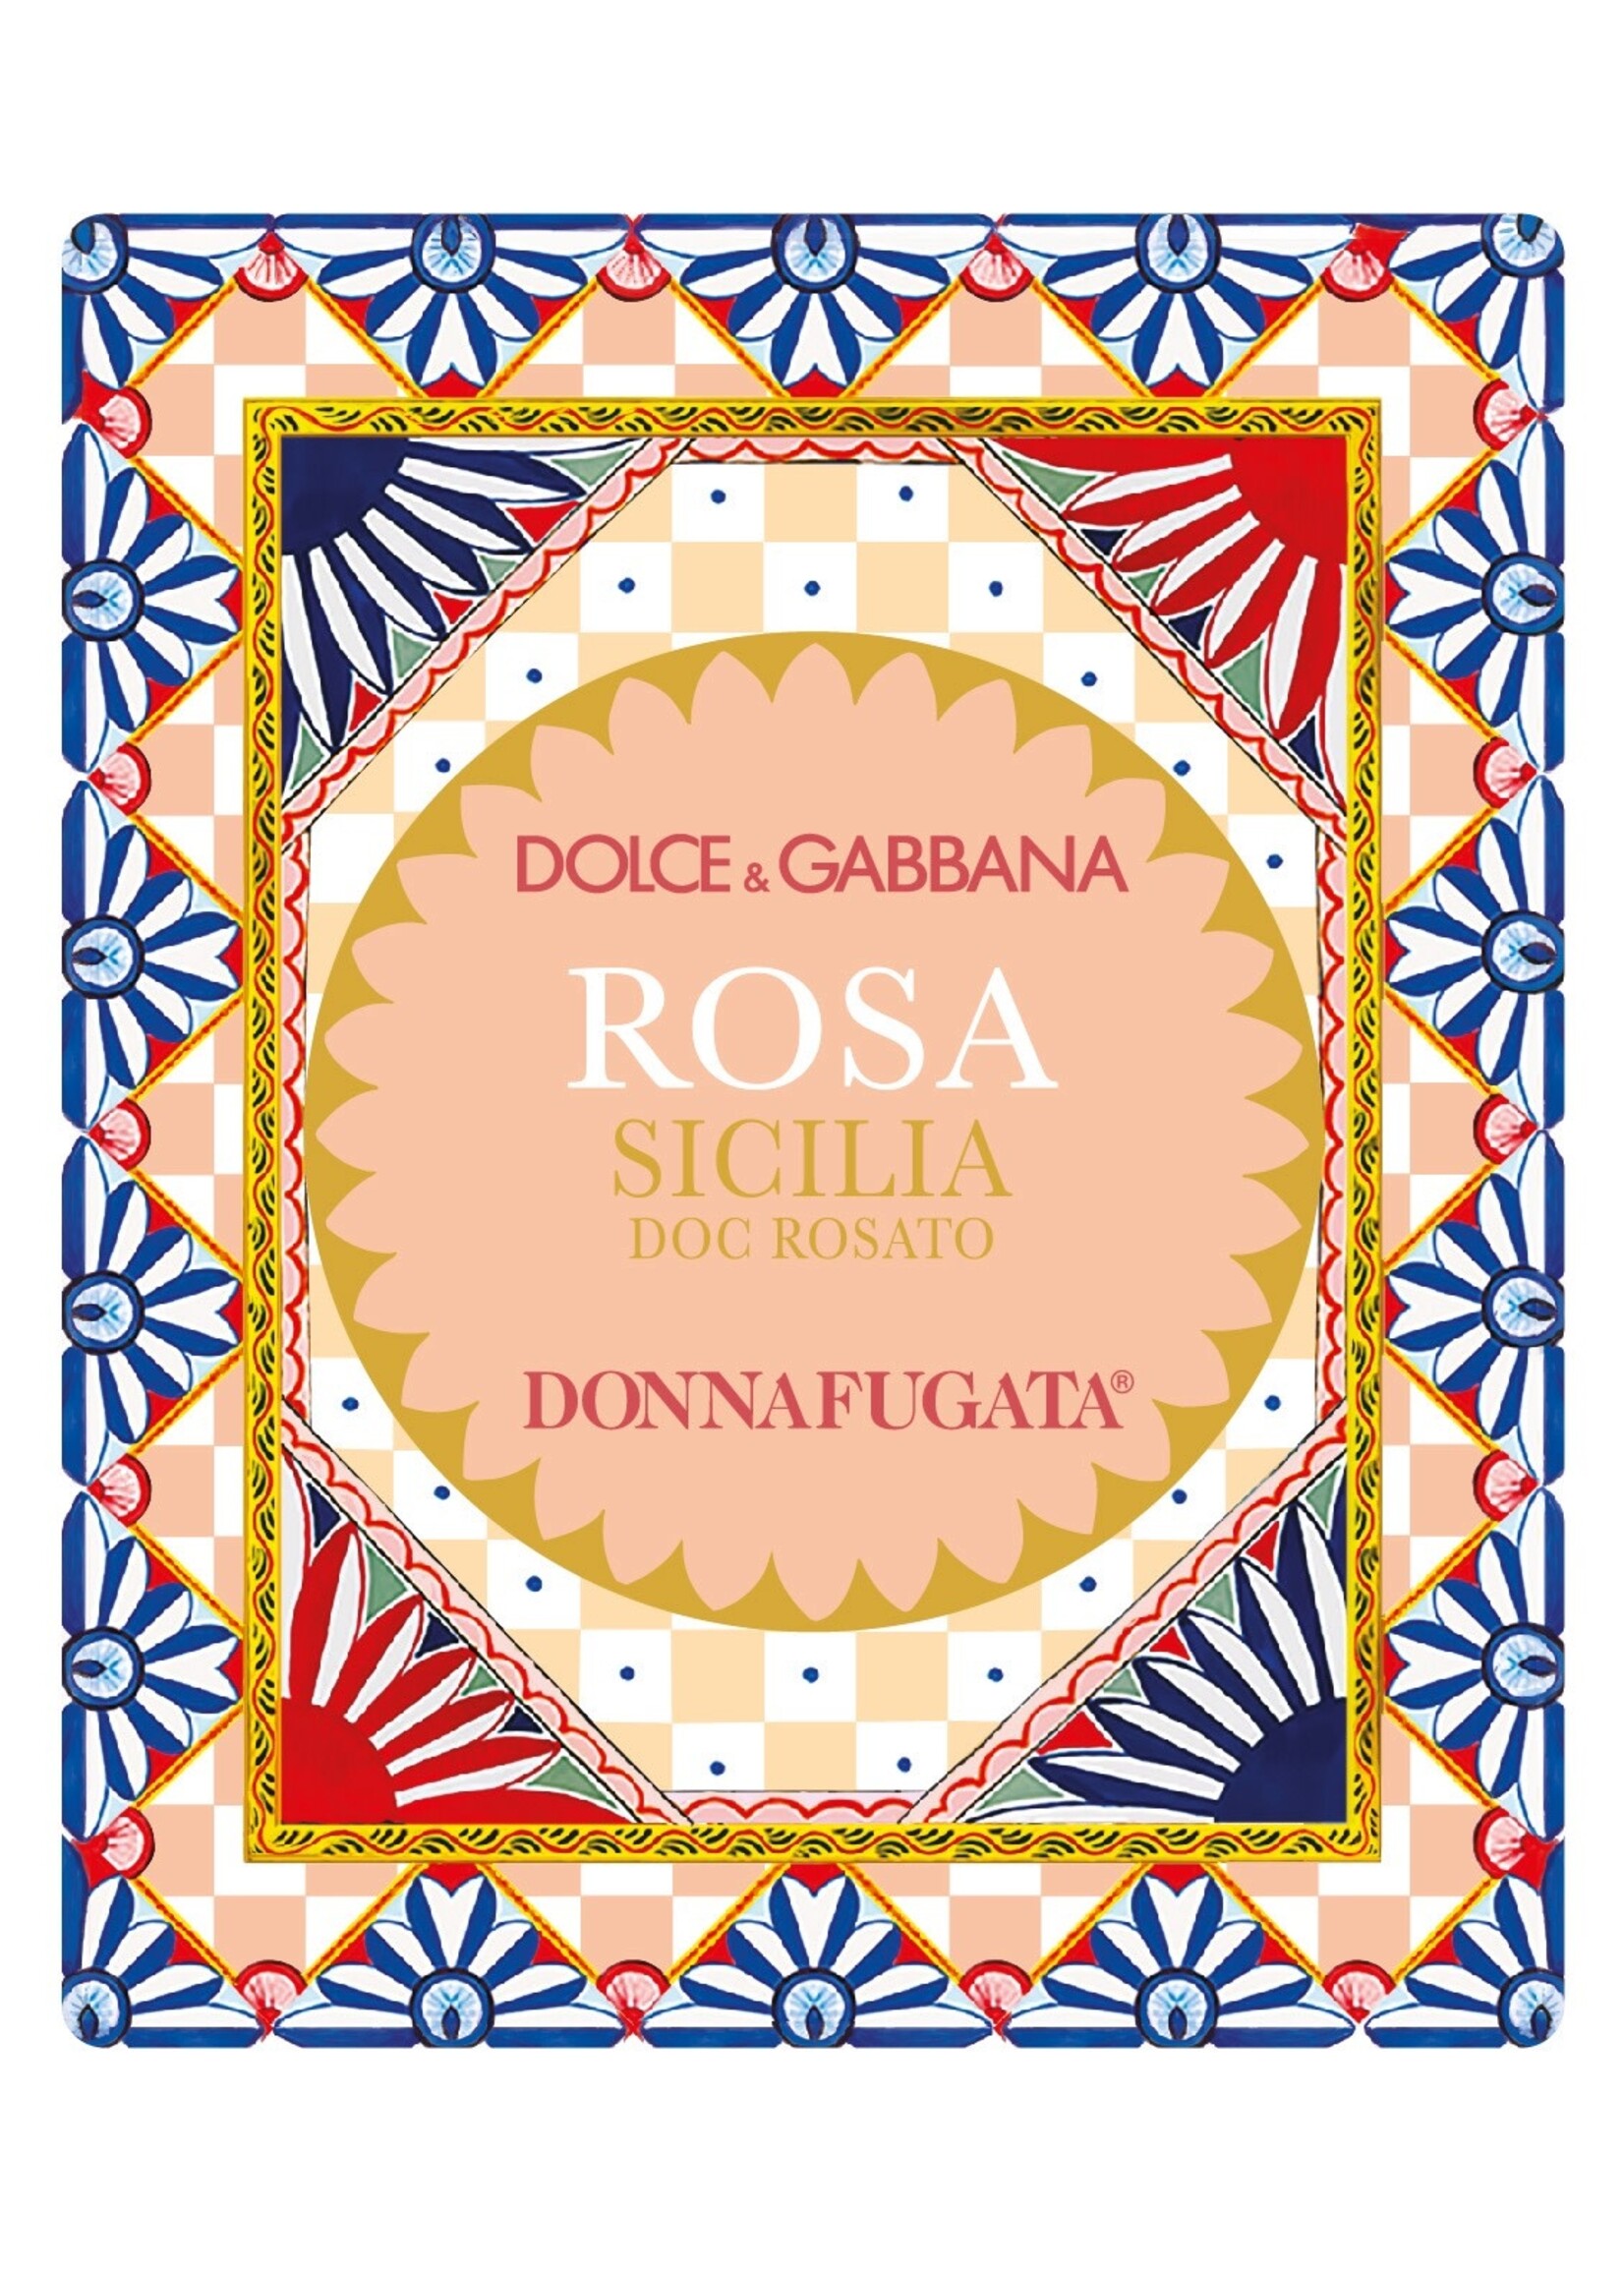 Donnafugata Donnafugata and Dolce & Gabbana Rosa 2021 - Rose wine with Gift Box